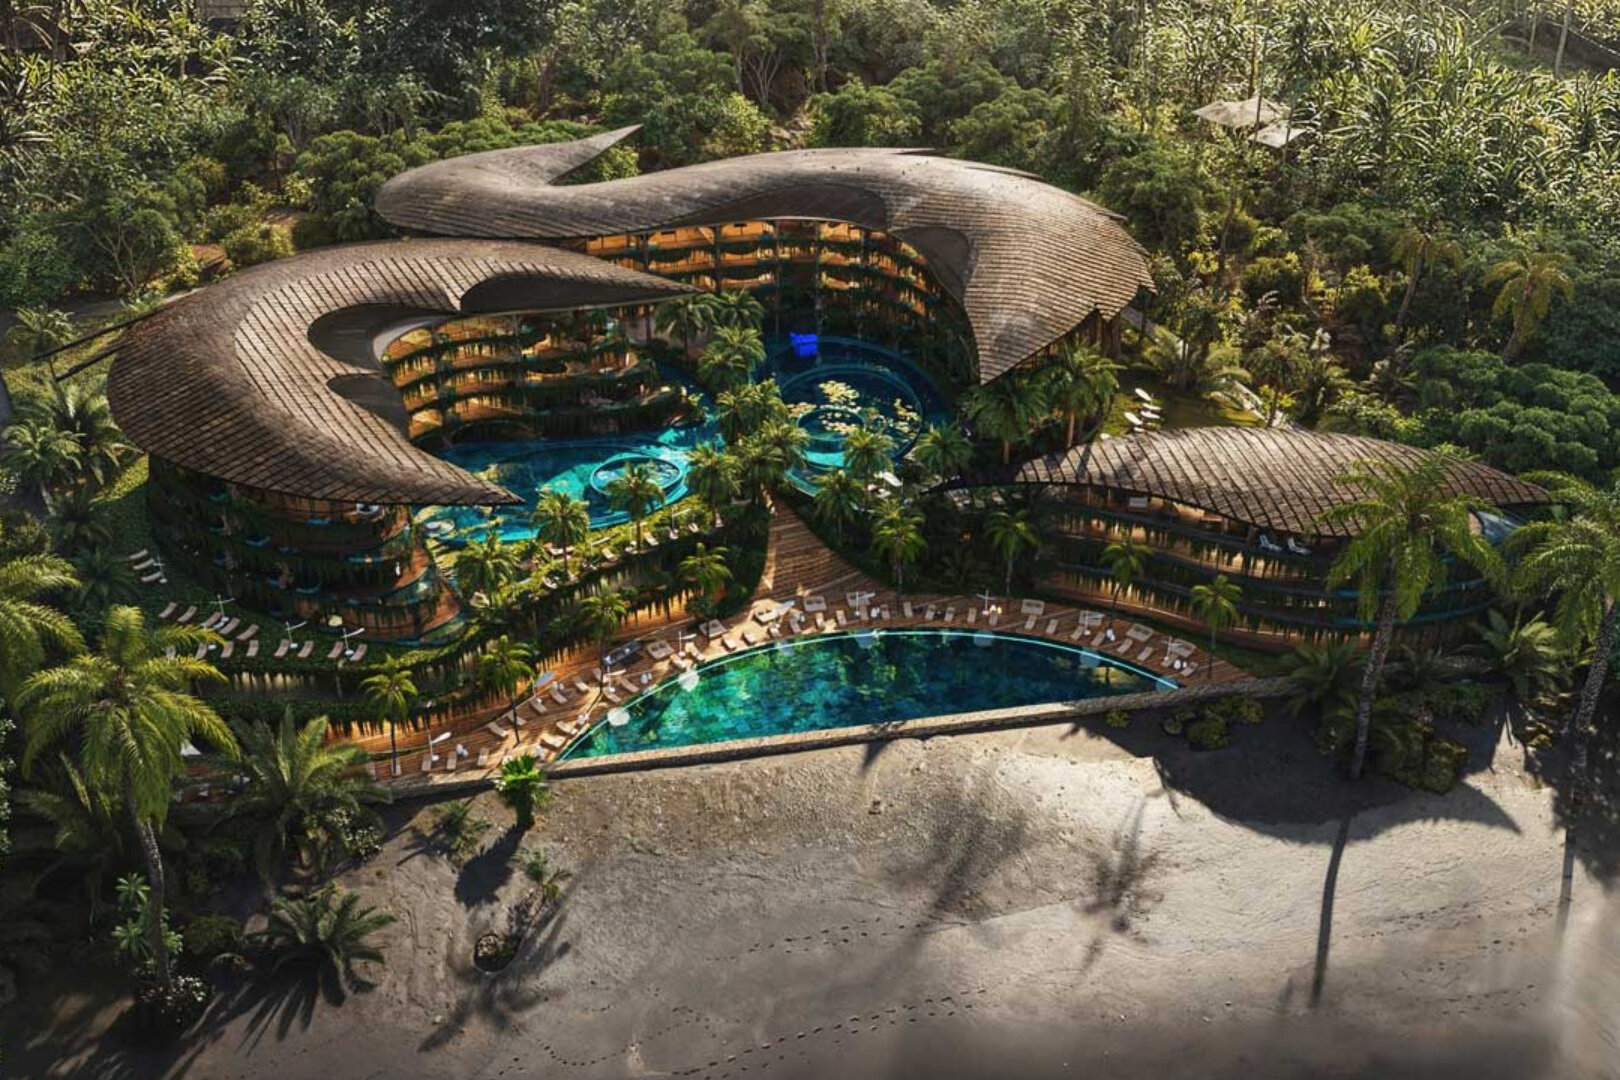 Курорт в виде мифического дракона откроют на Бали